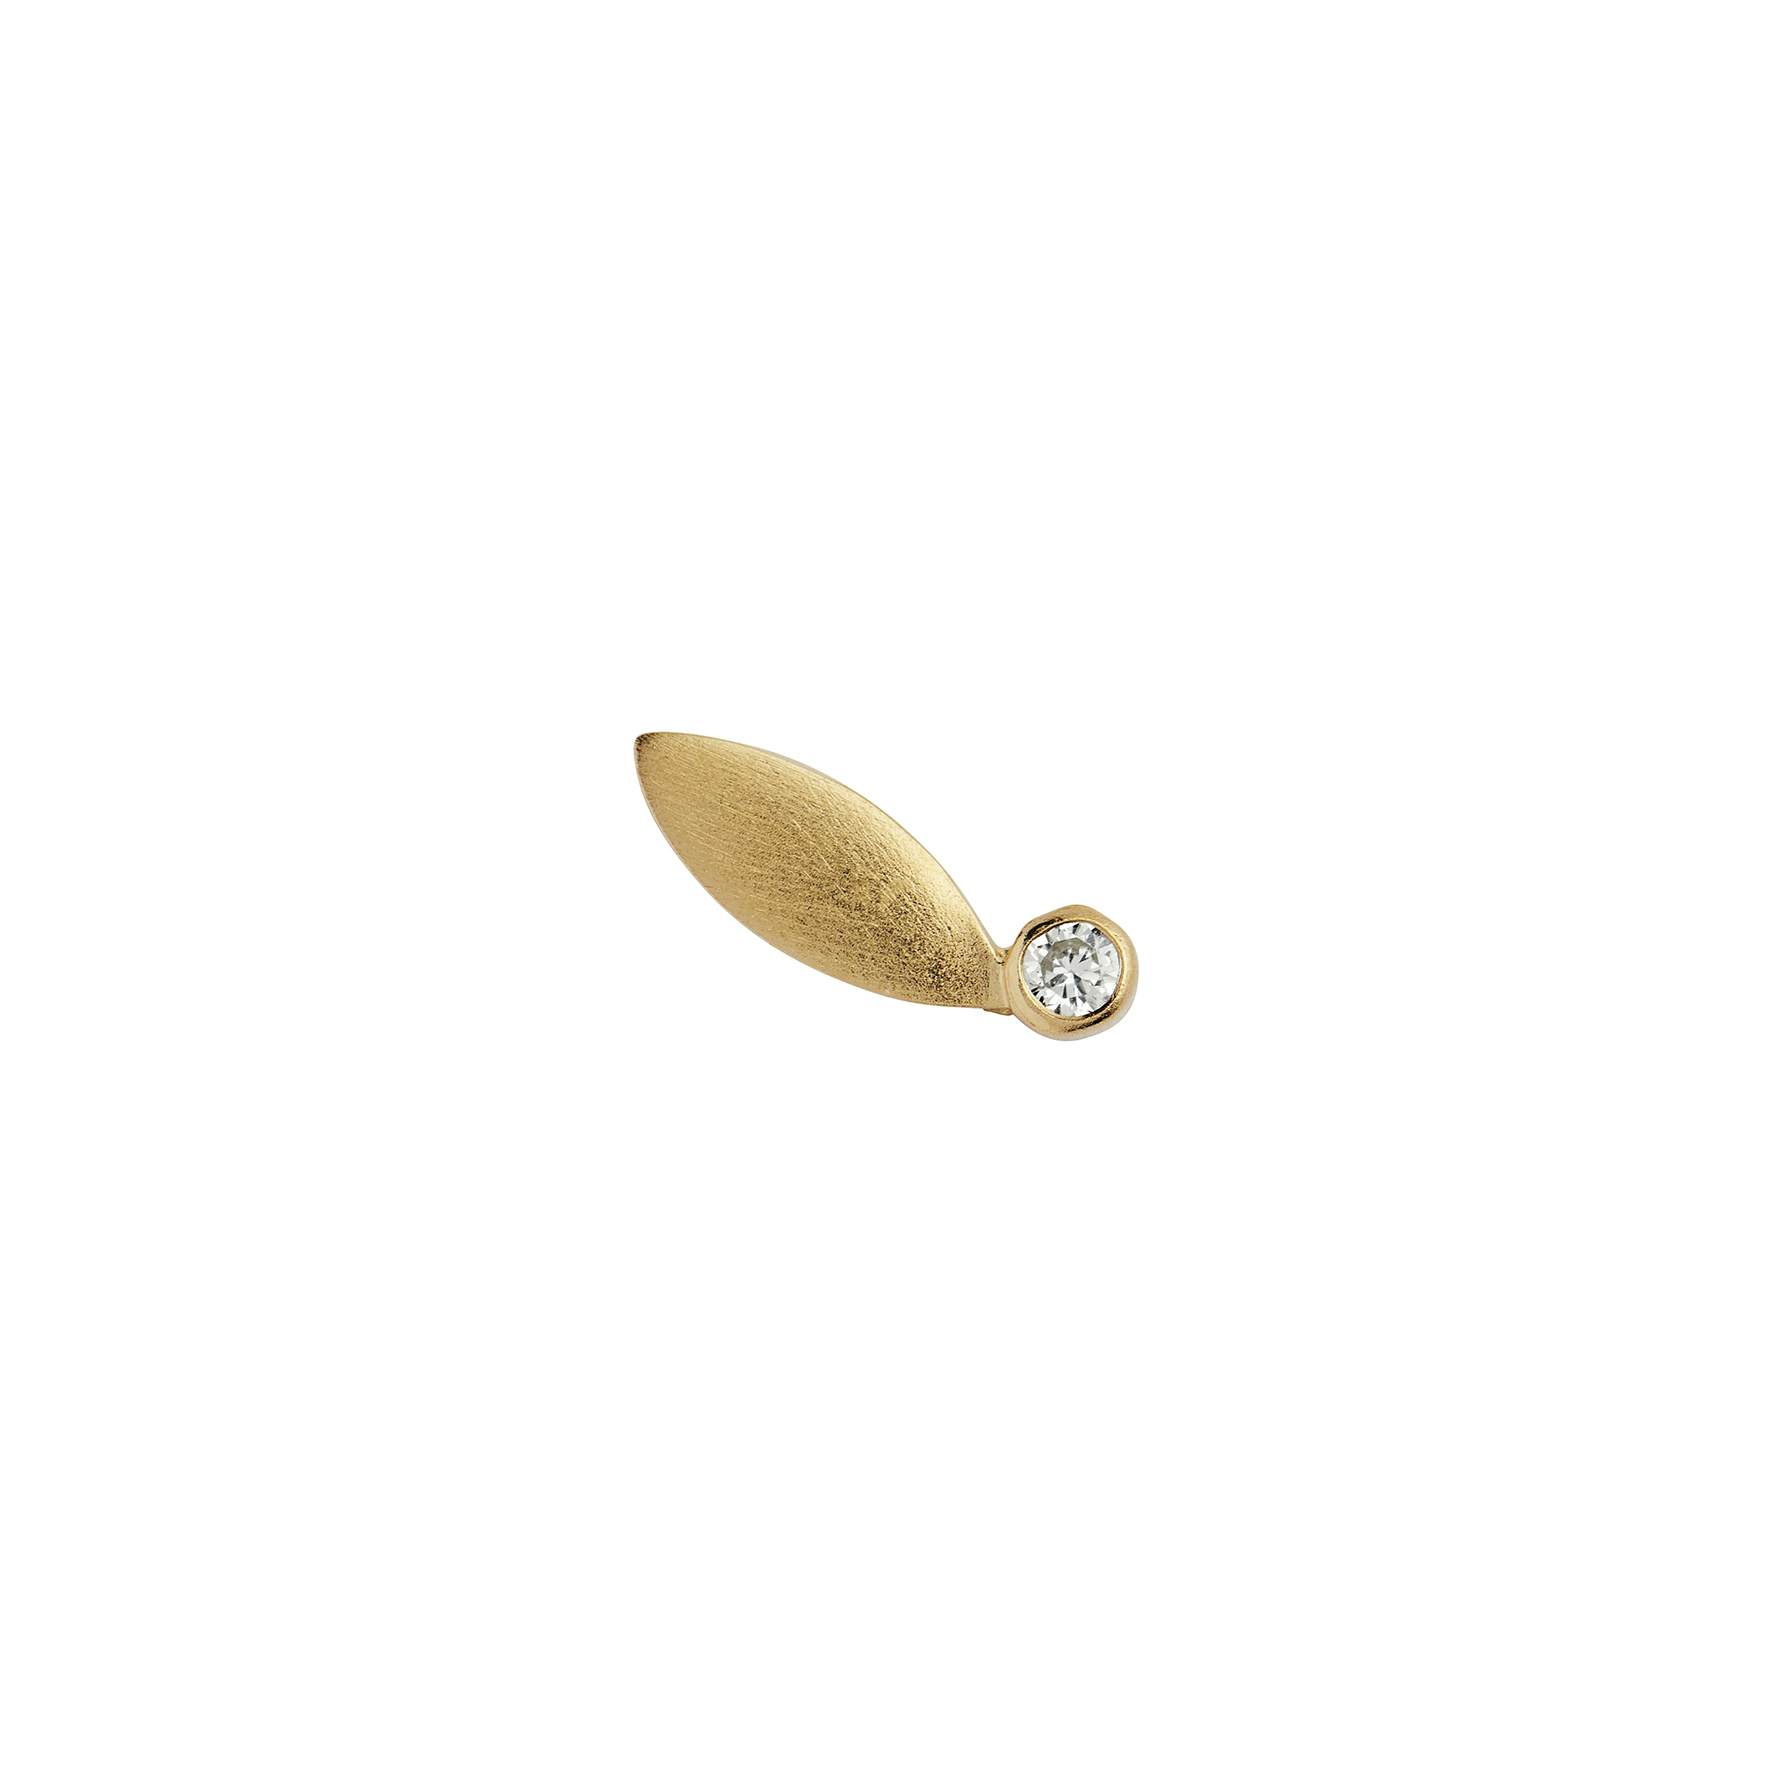 Big Dot Leaf Earstick Light Peridot fra STINE A Jewelry i Forgyldt-Sølv Sterling 925|Matt